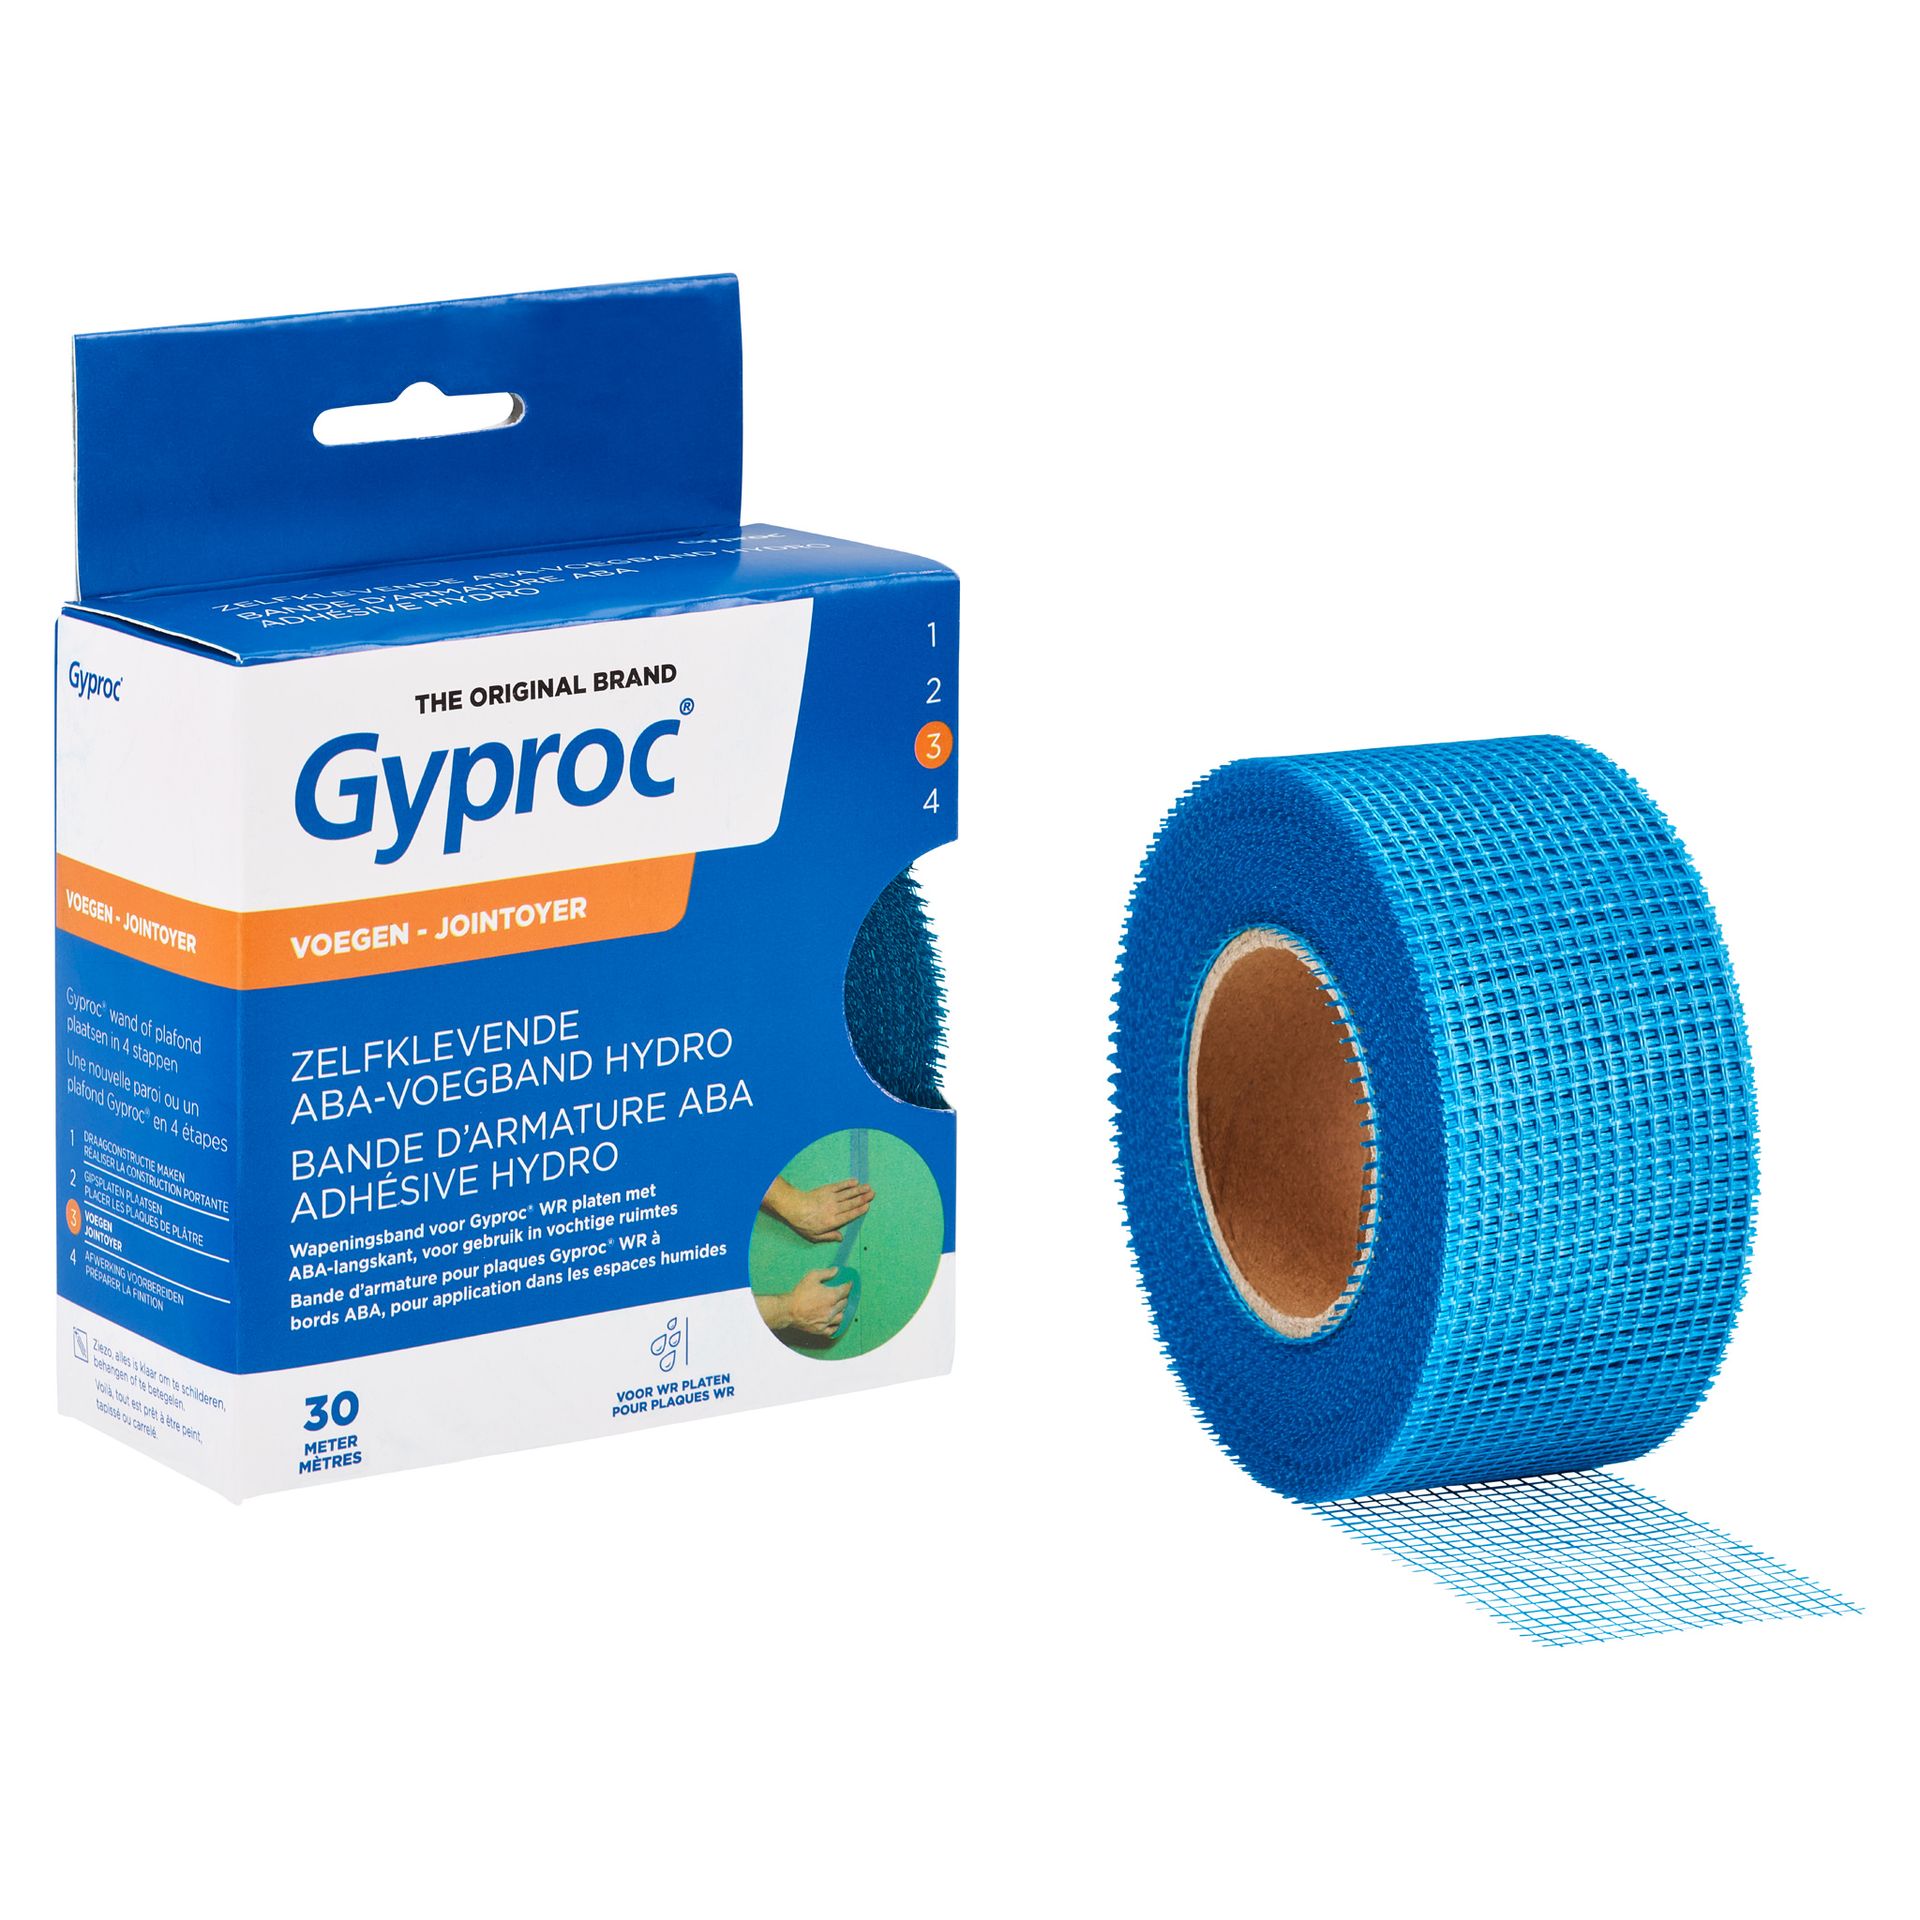 Gyproc packshot zelfklevende ABA voegband